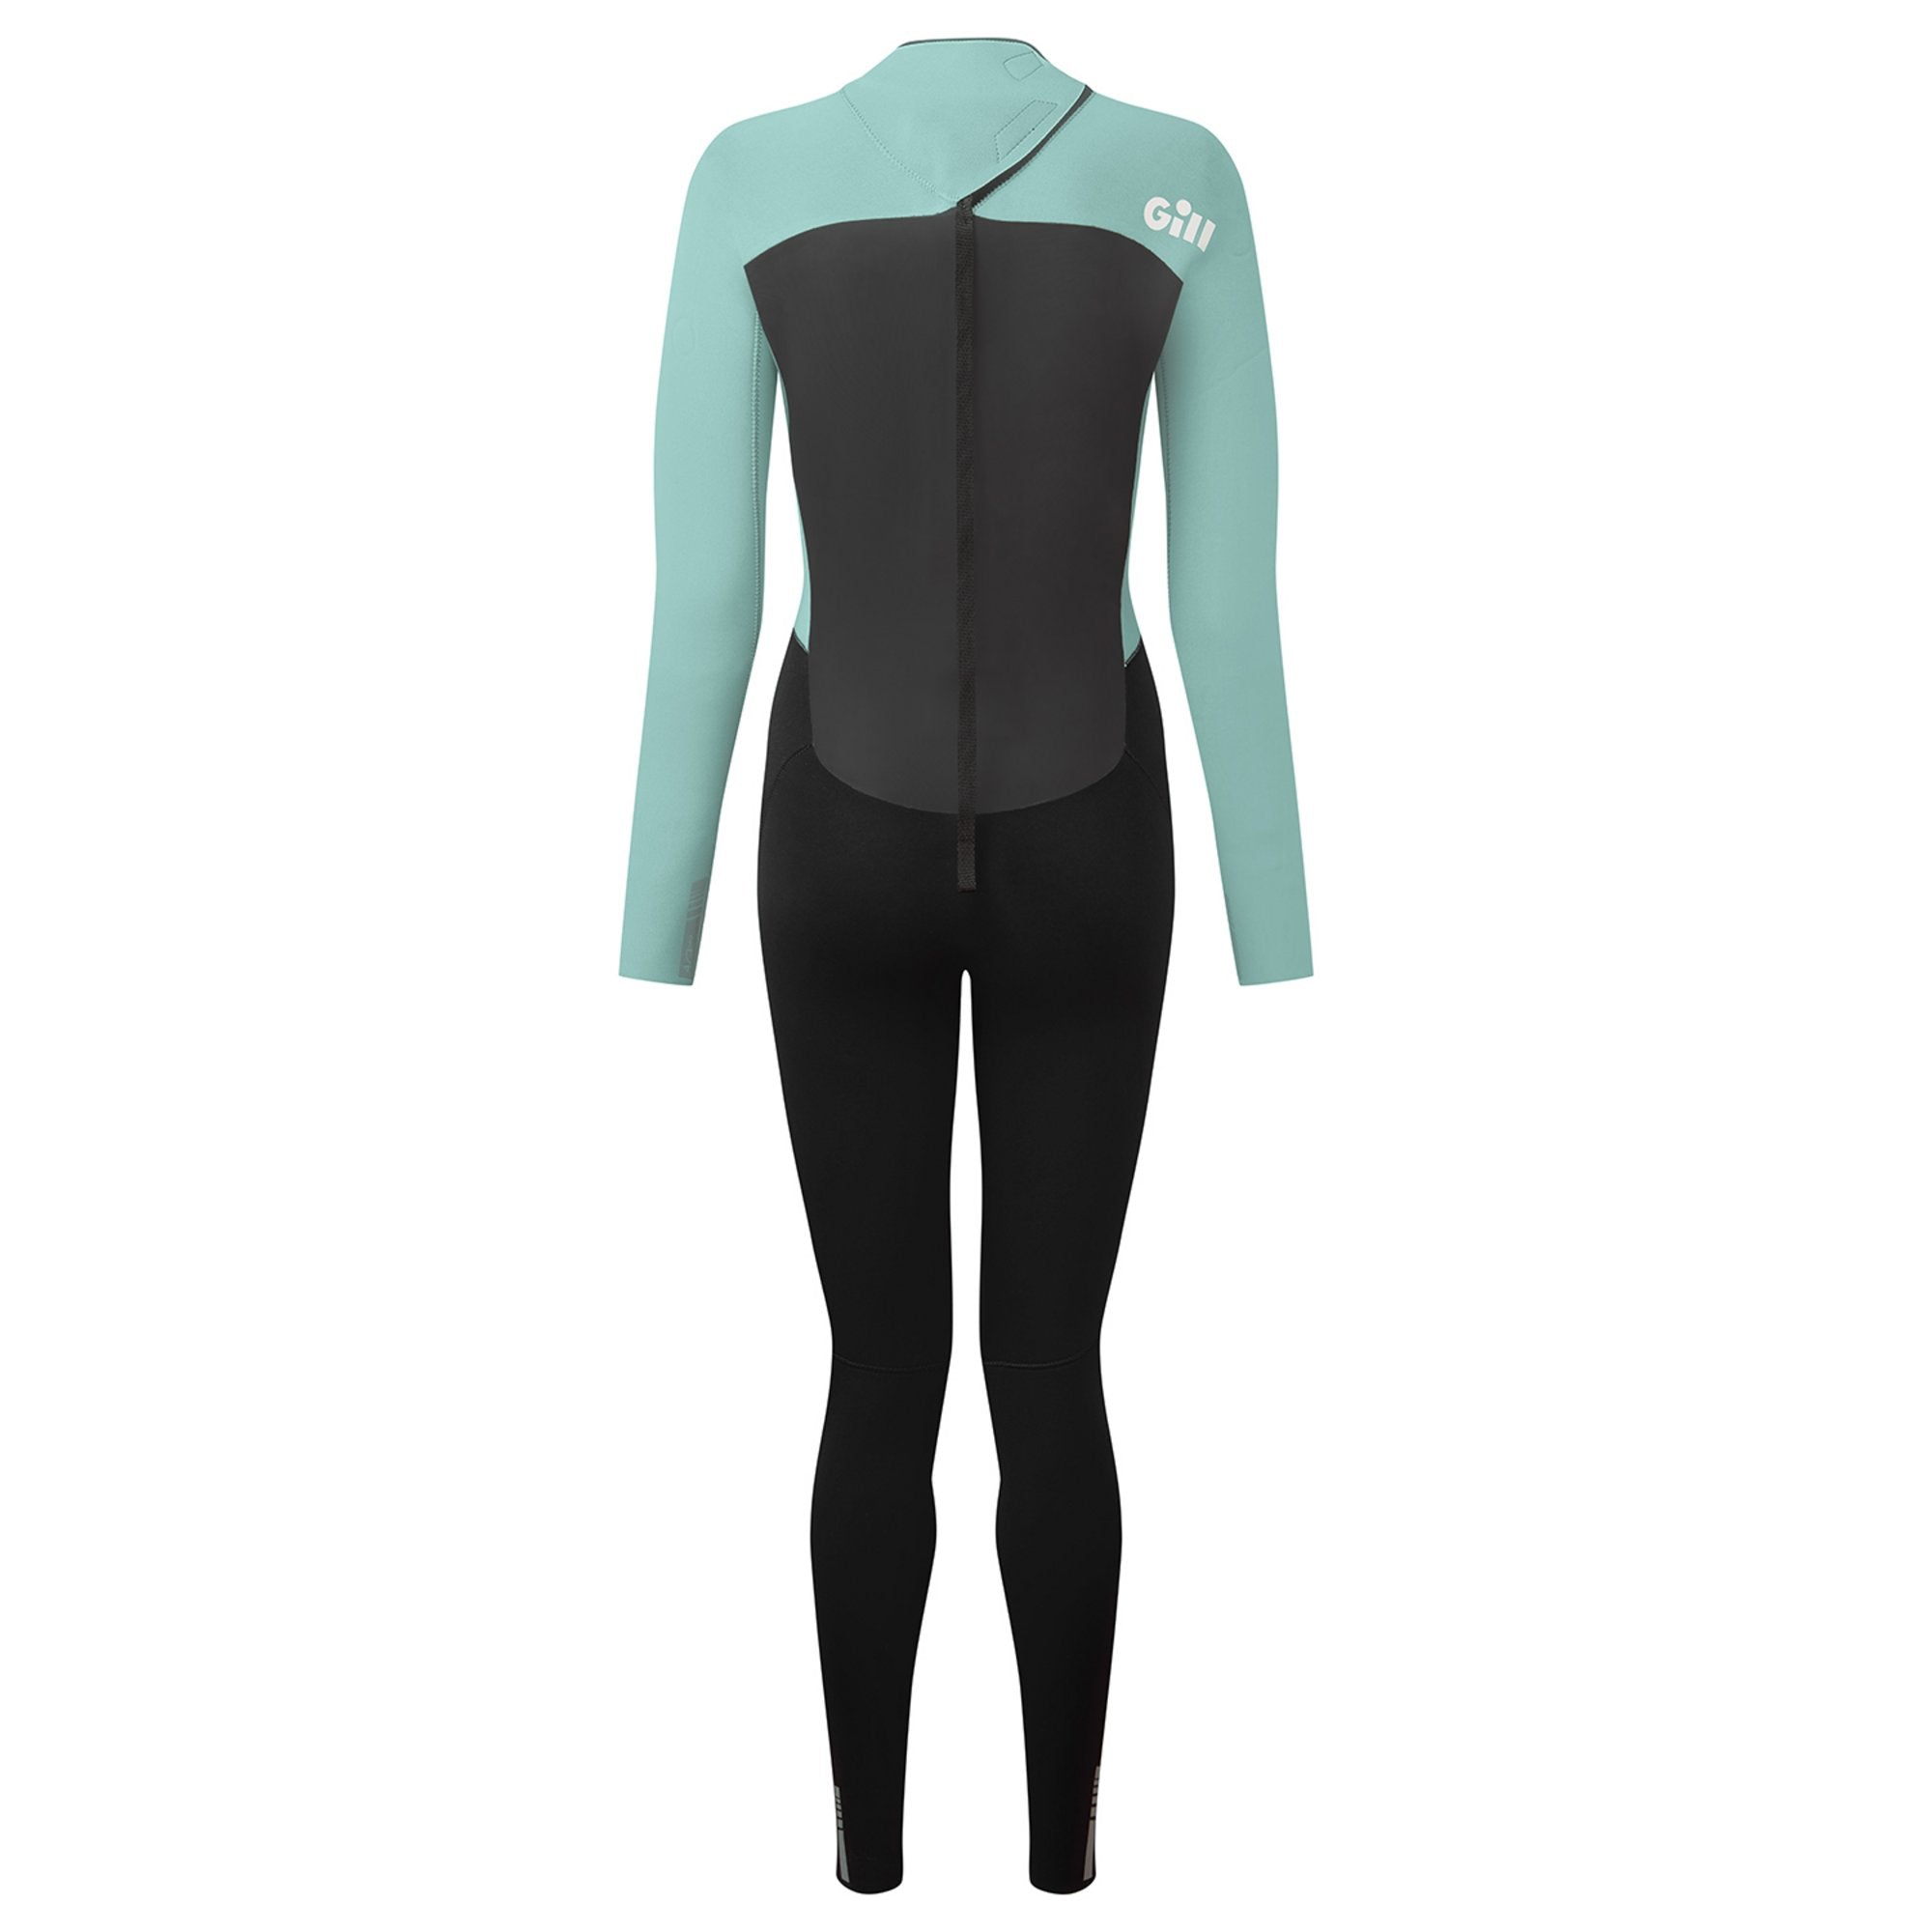 Gill Women's Pursuit 4/3mm Neoprene Full Body Long Sleeve Cold Water Wetsuit